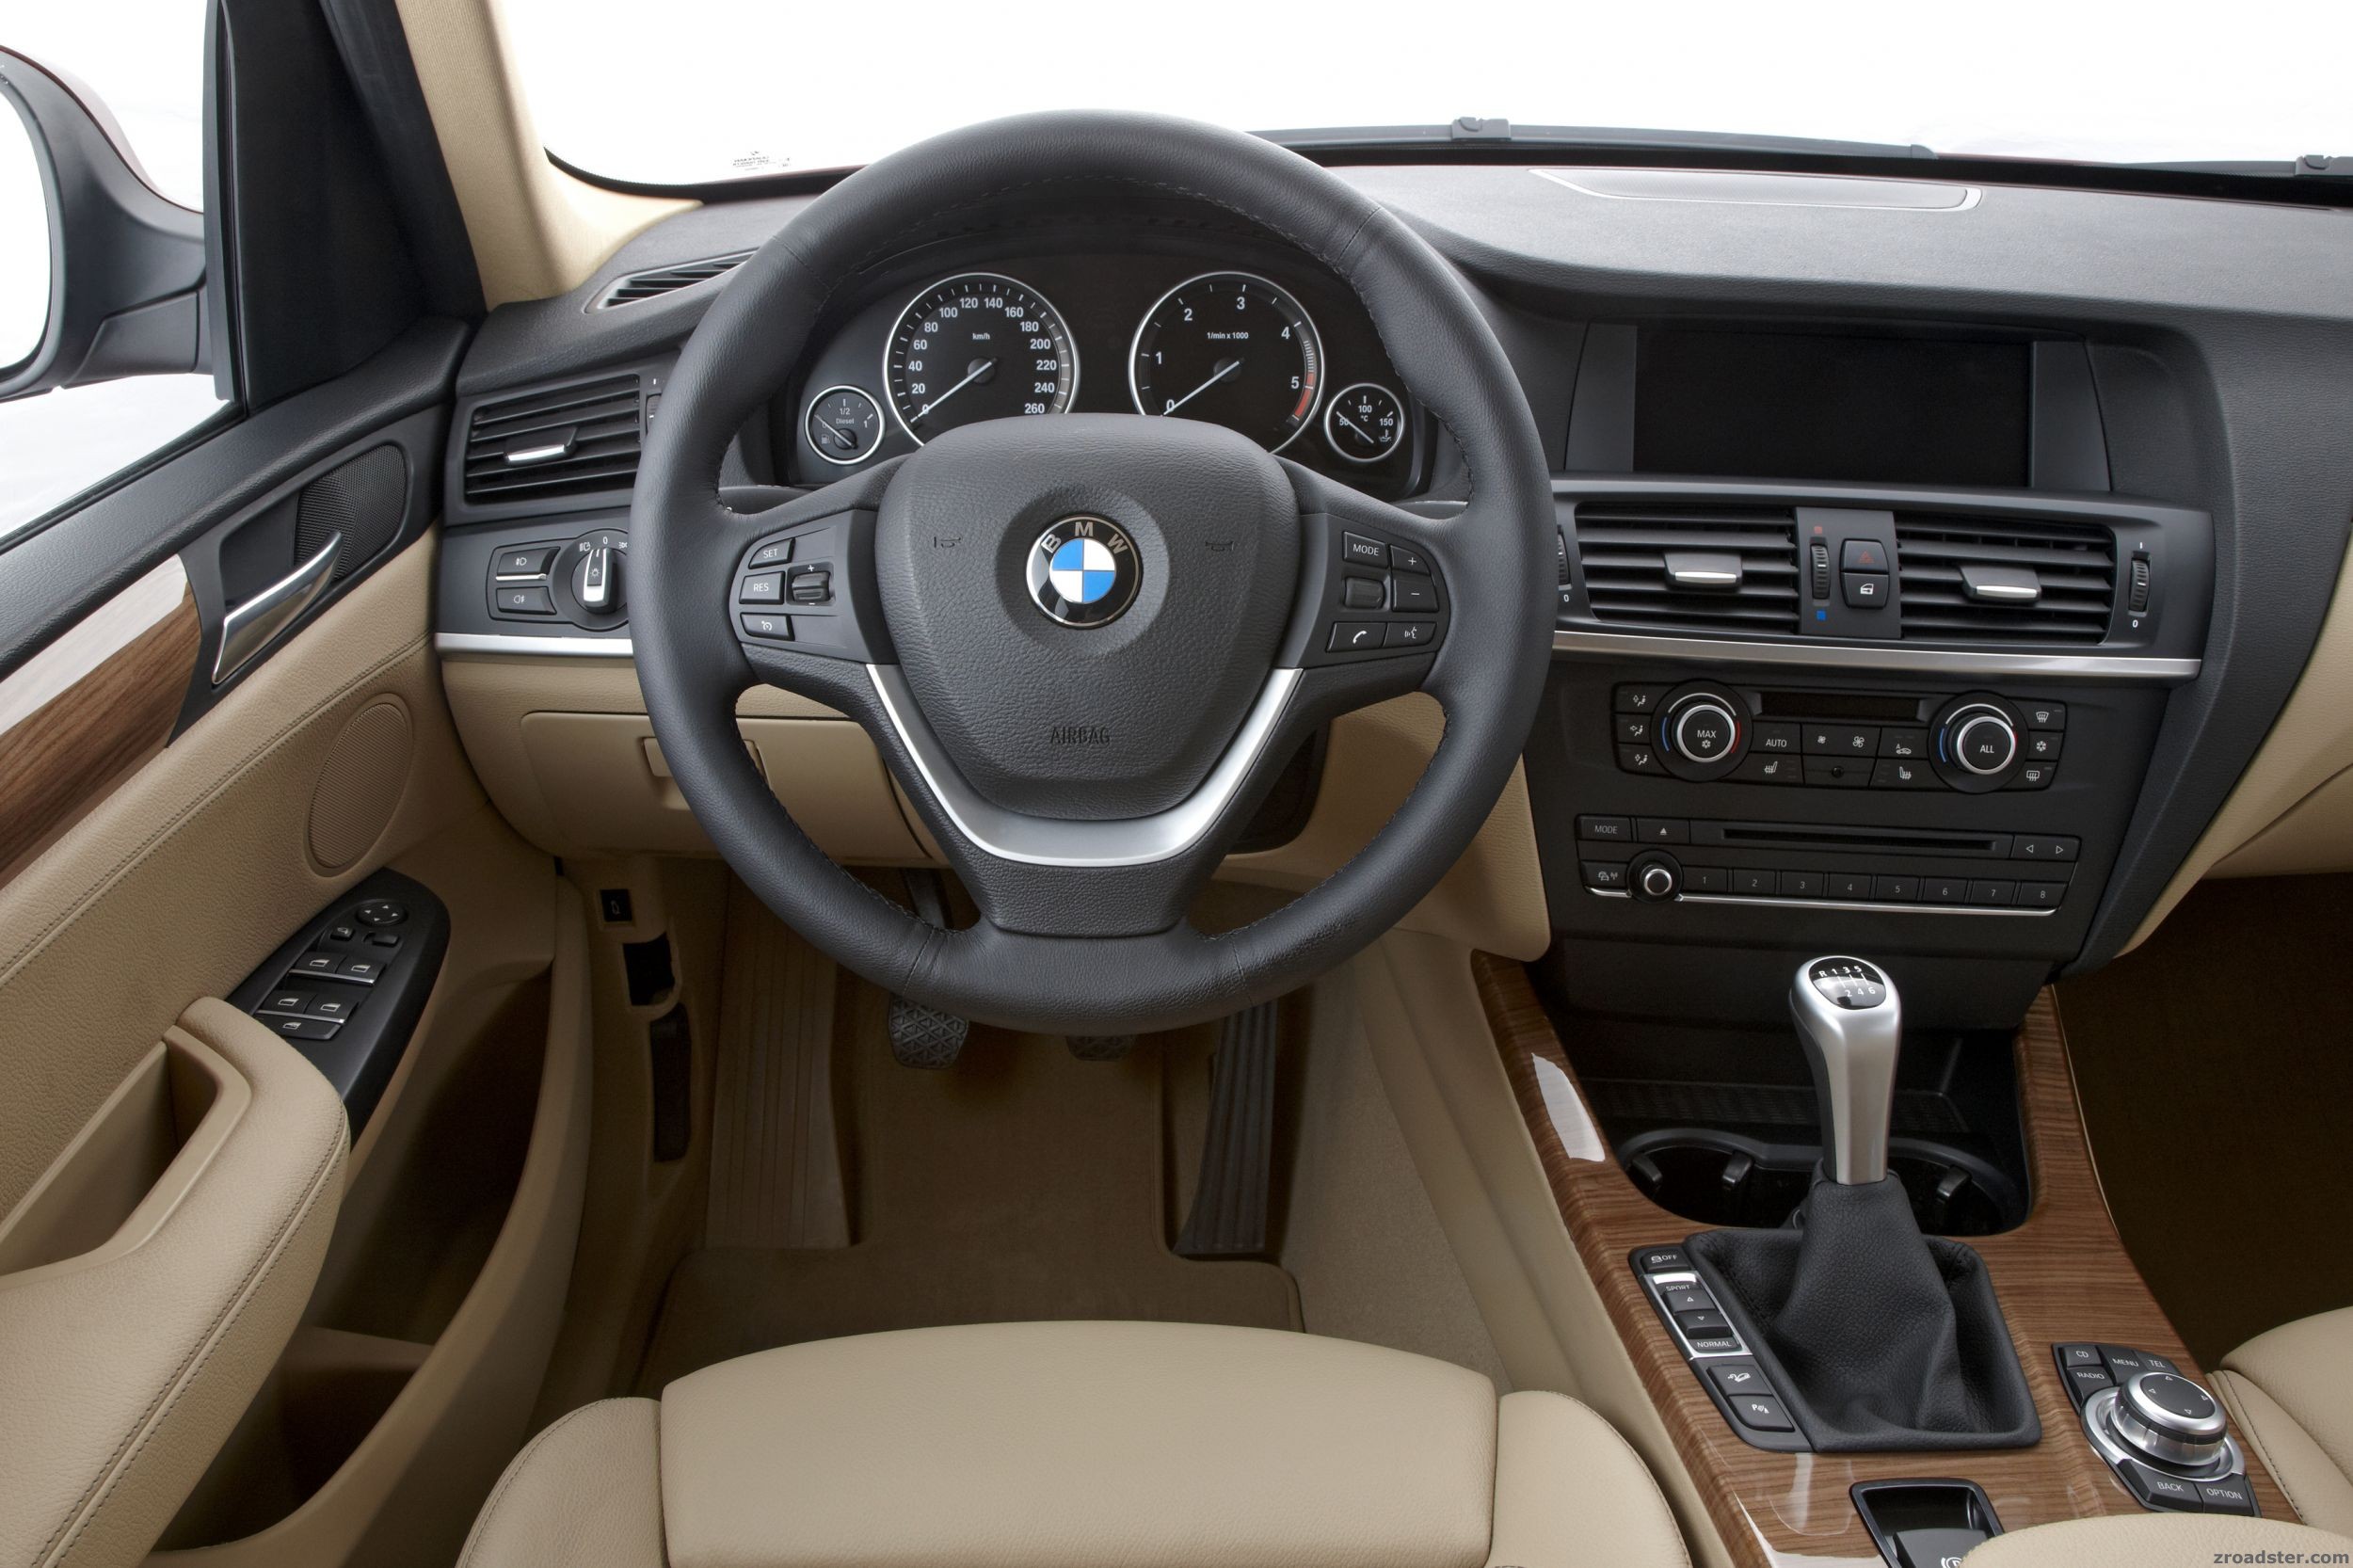 BMW X3 - Interieur